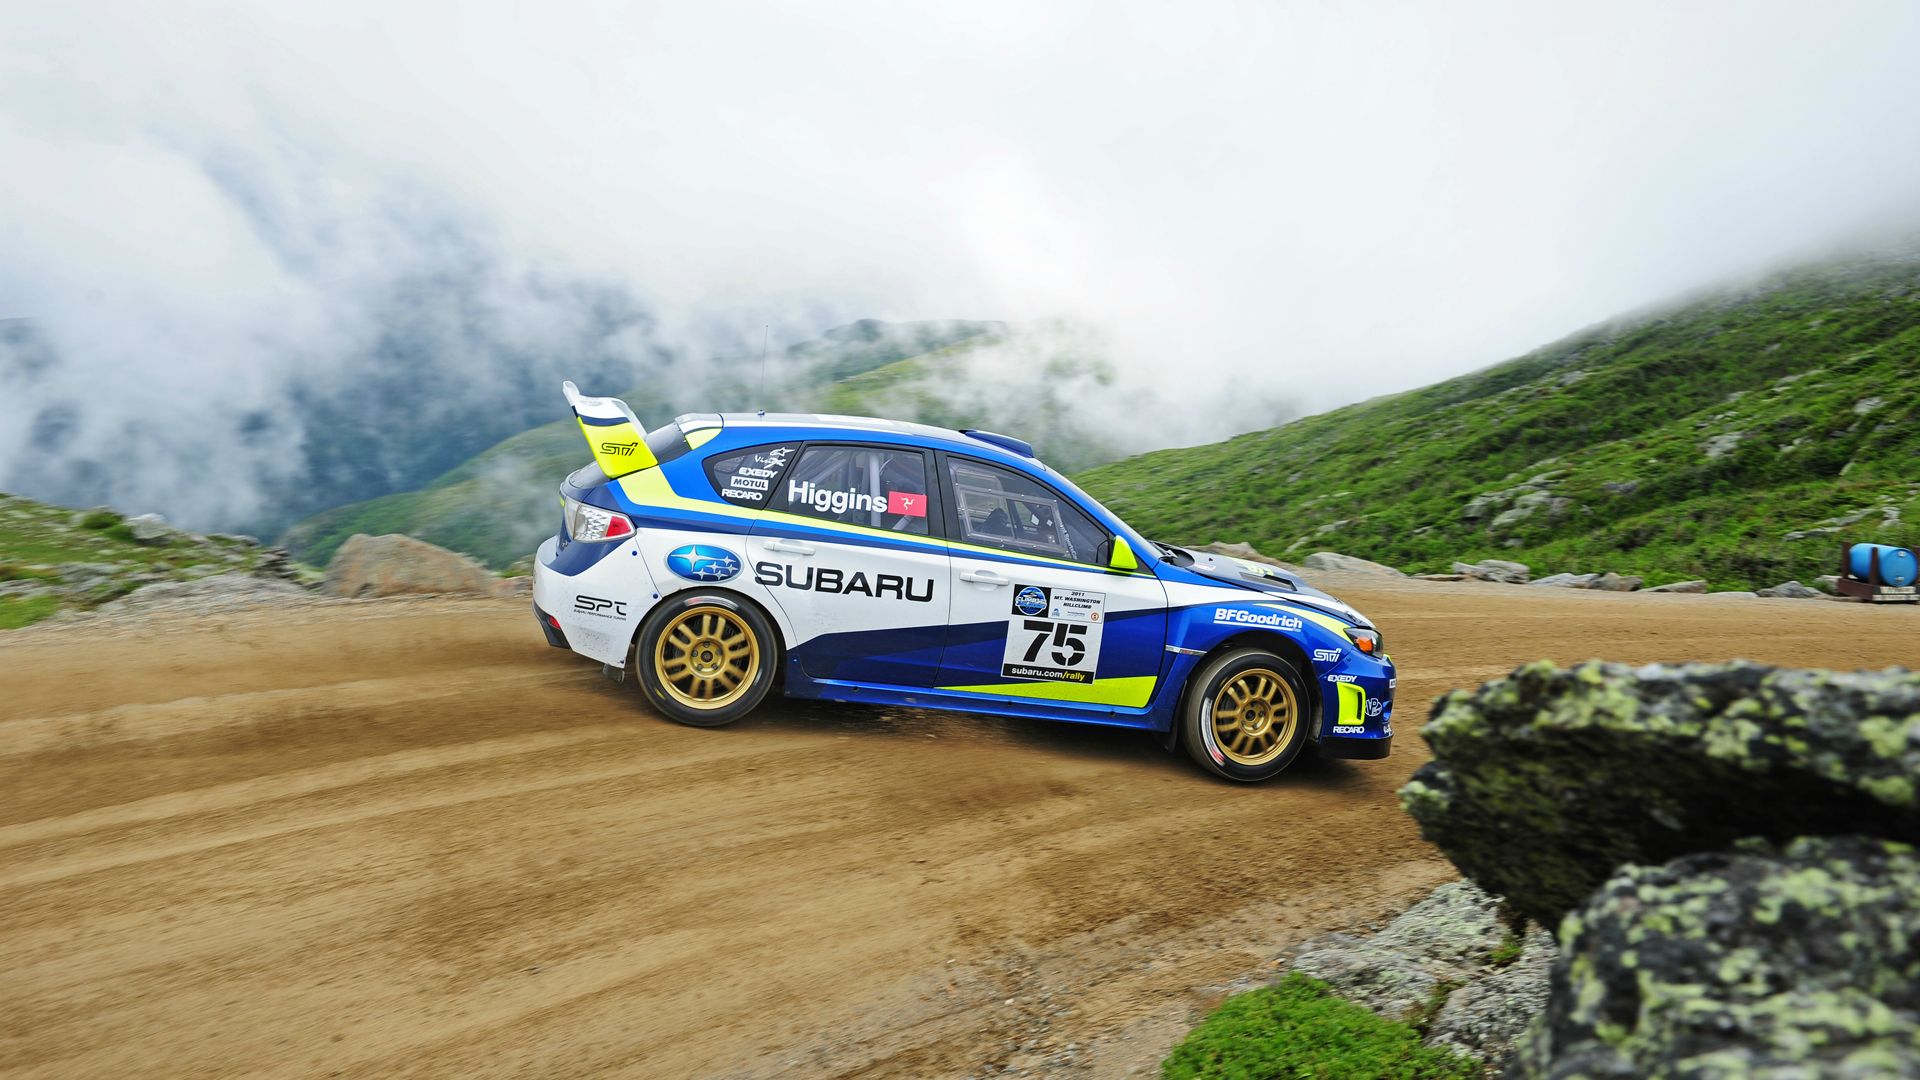 Subaru Image Rally Racing Car Wallpaper Picture For